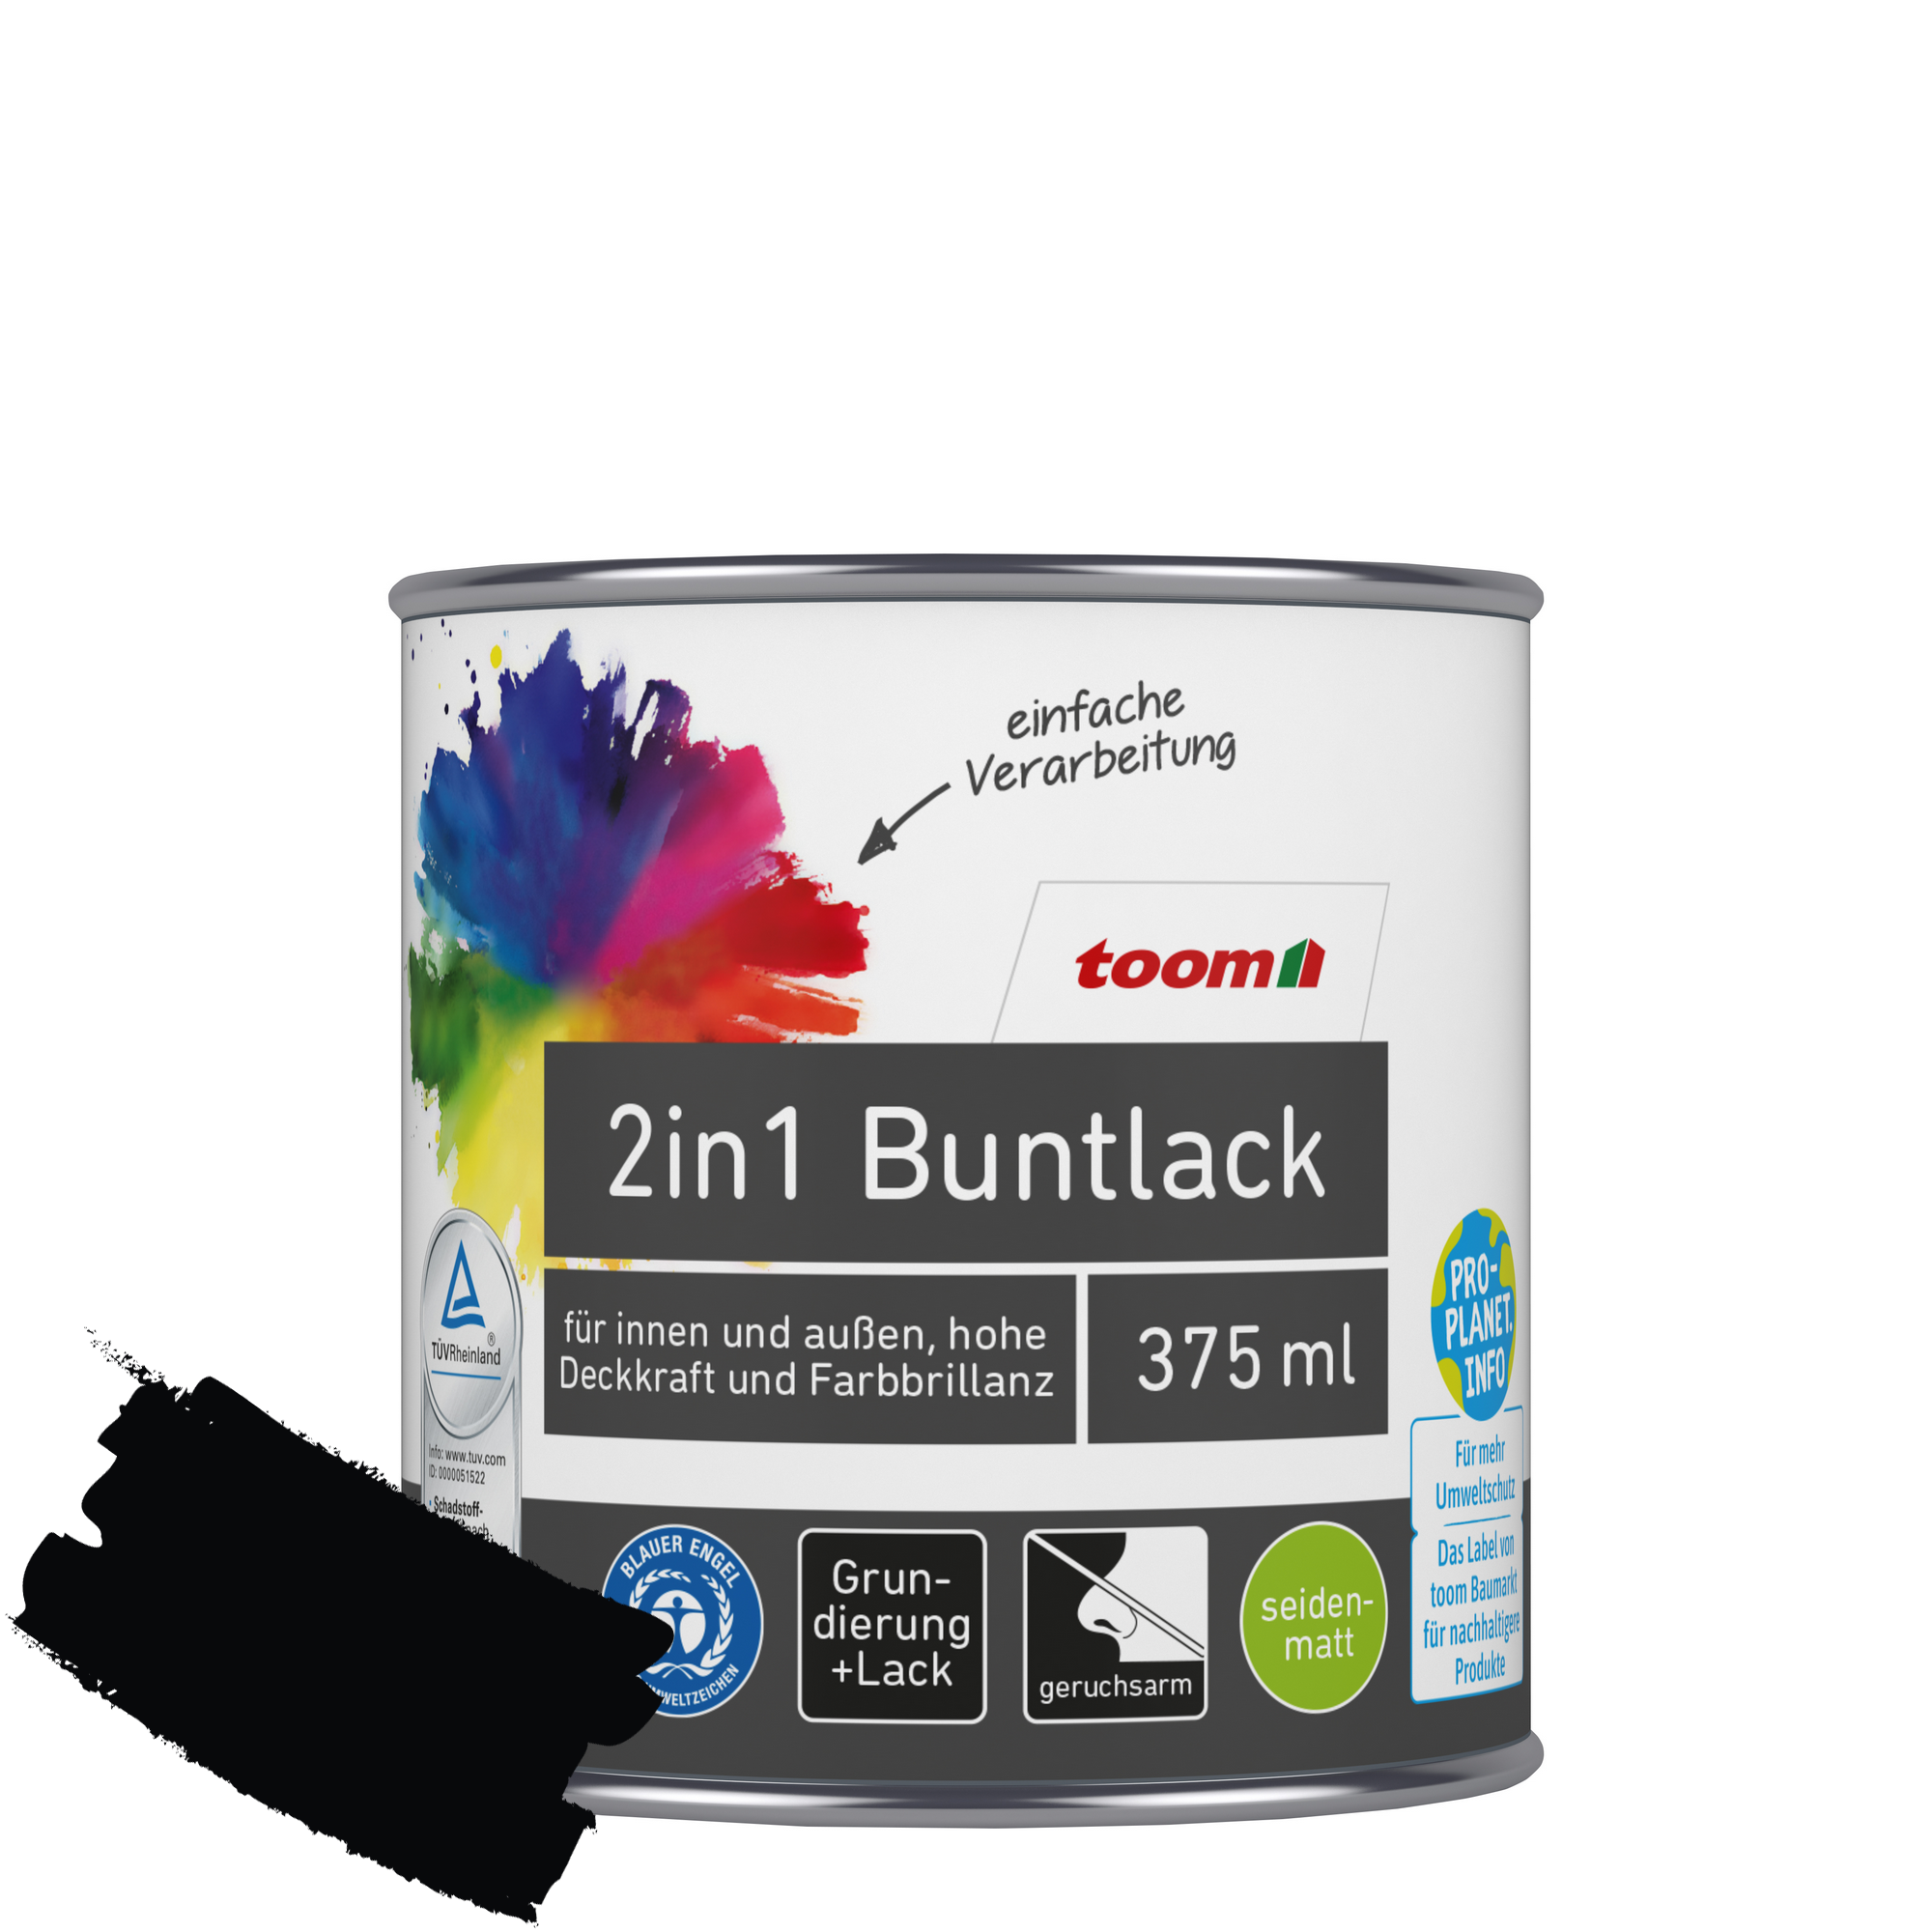 2in1 Buntlack 'Mitternacht' tiefschwarz seidenmatt 375 ml + product picture